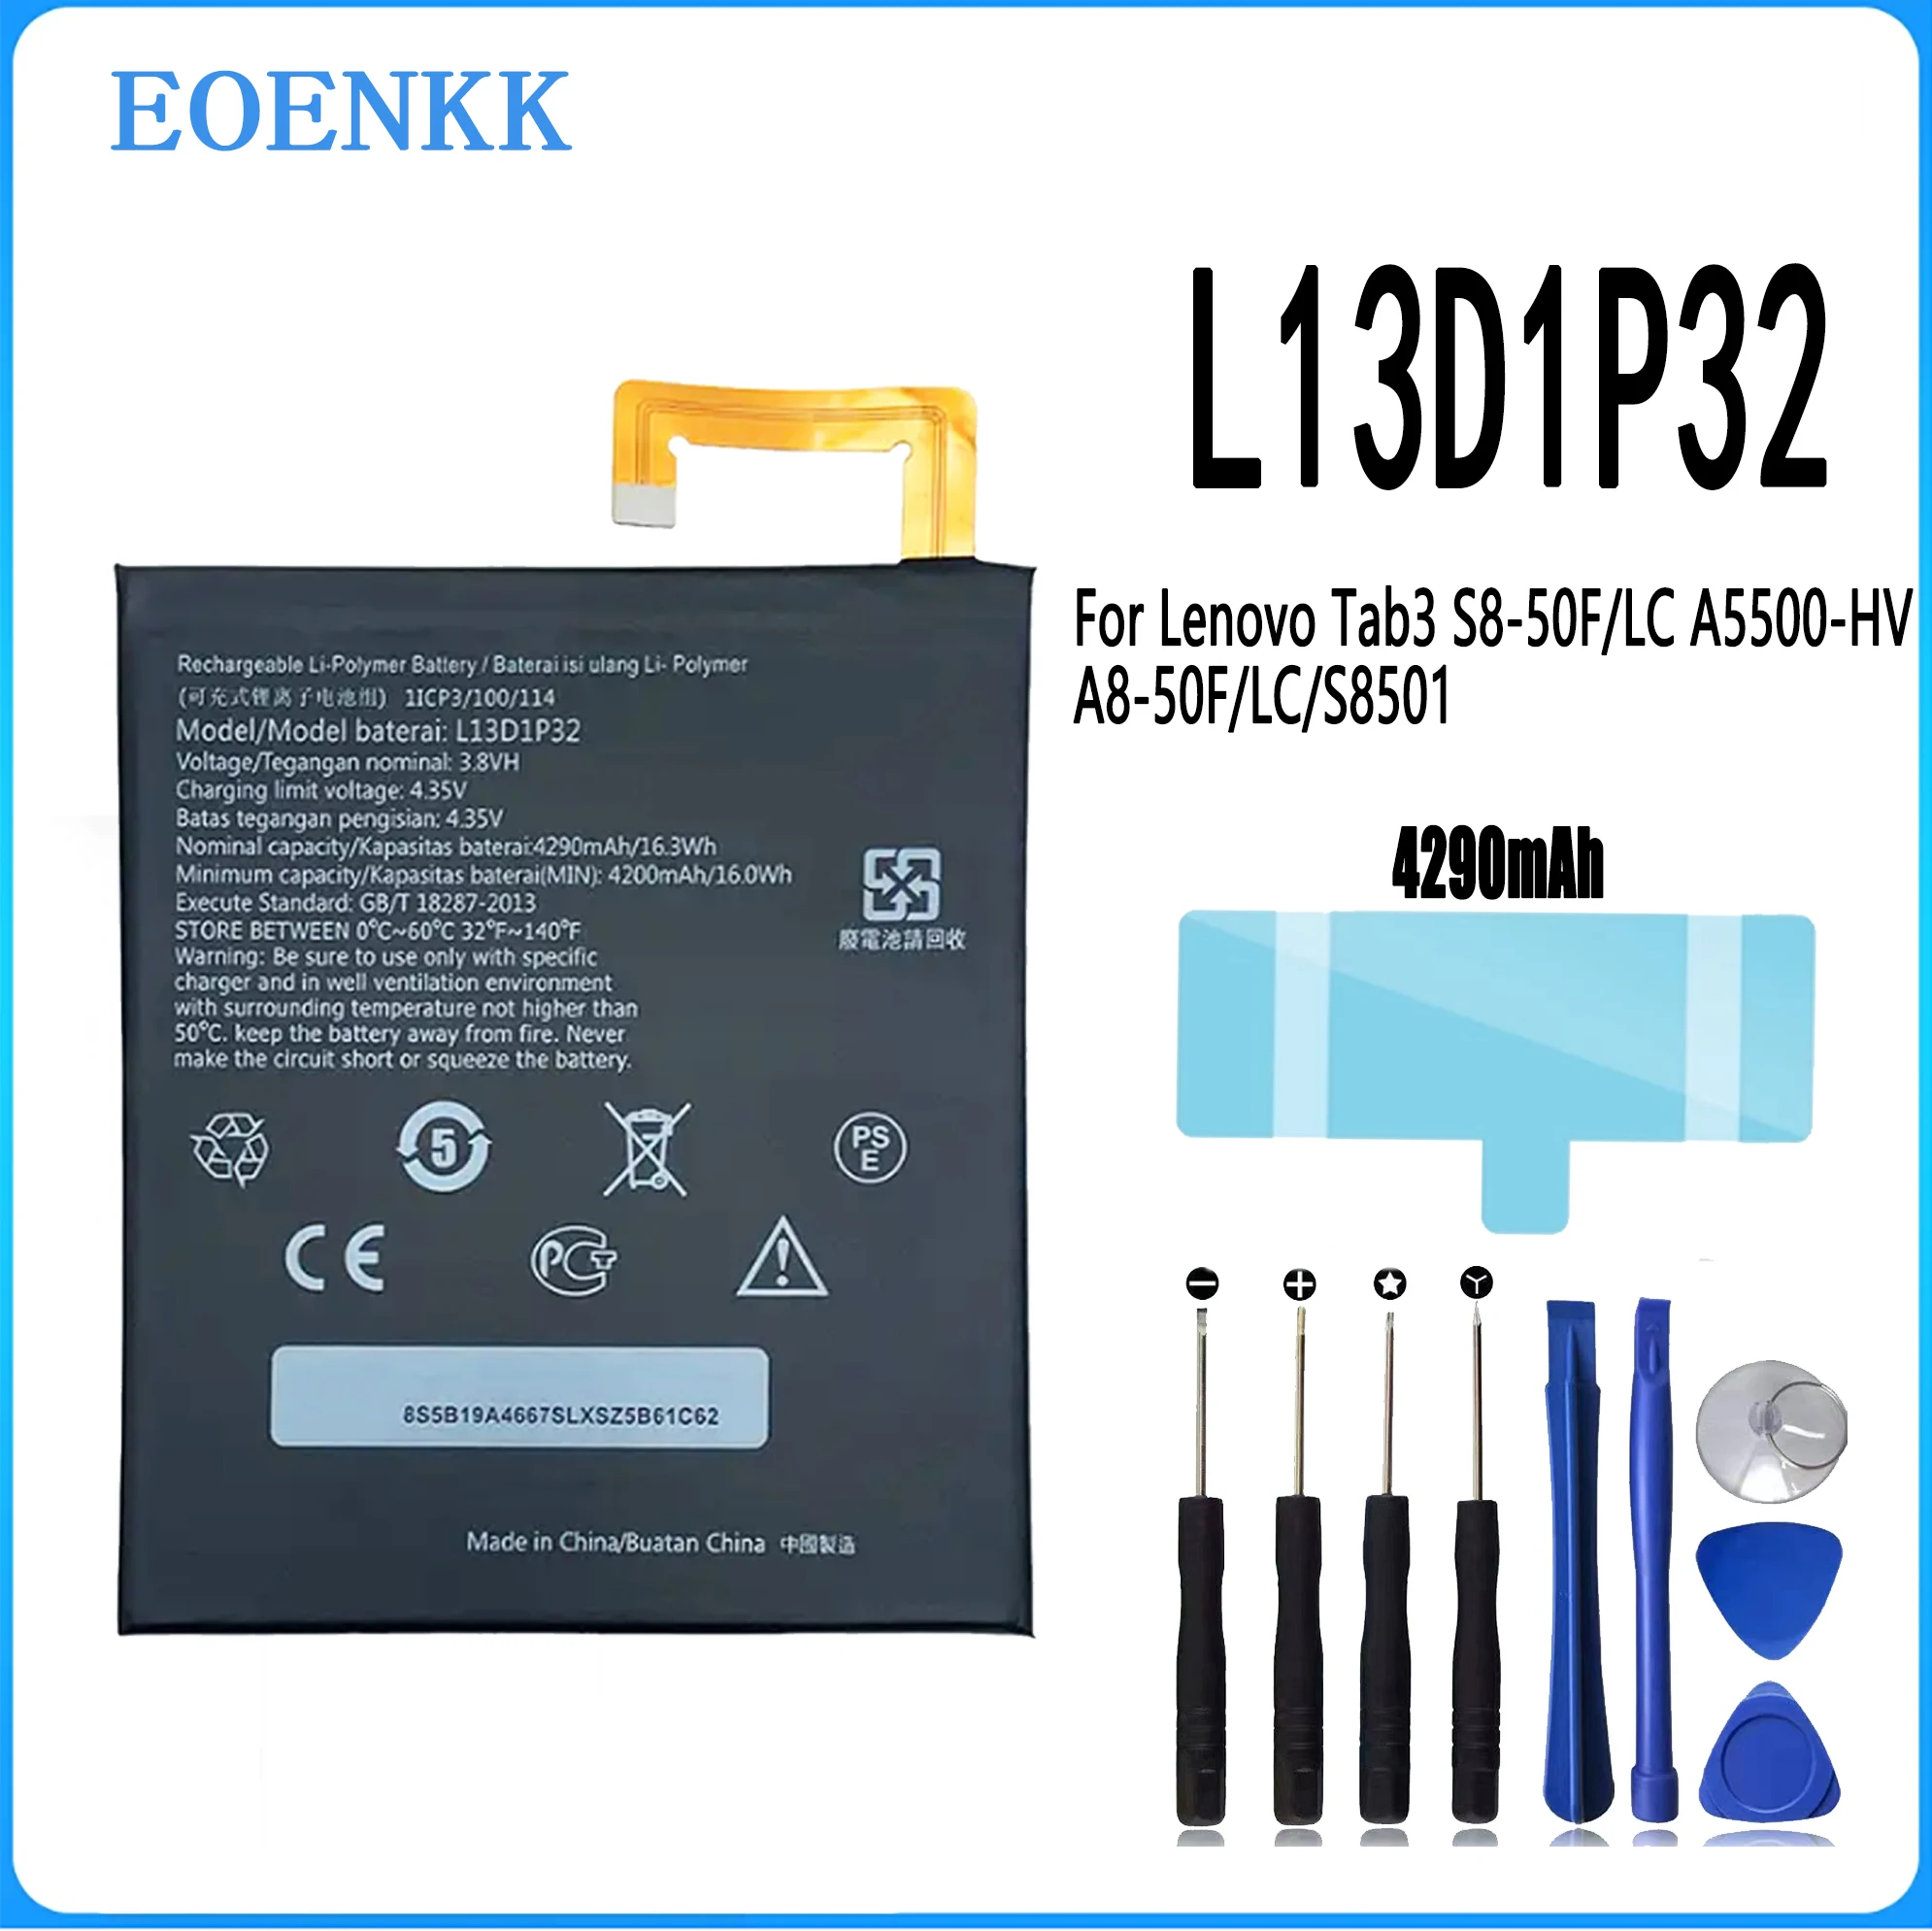 

L13D1P32 Battery For LENOVO TAB IDEAPAD 8" A8-50 S8-50F A5500 TB3-850F high capacity Capacity Tablet Batteries